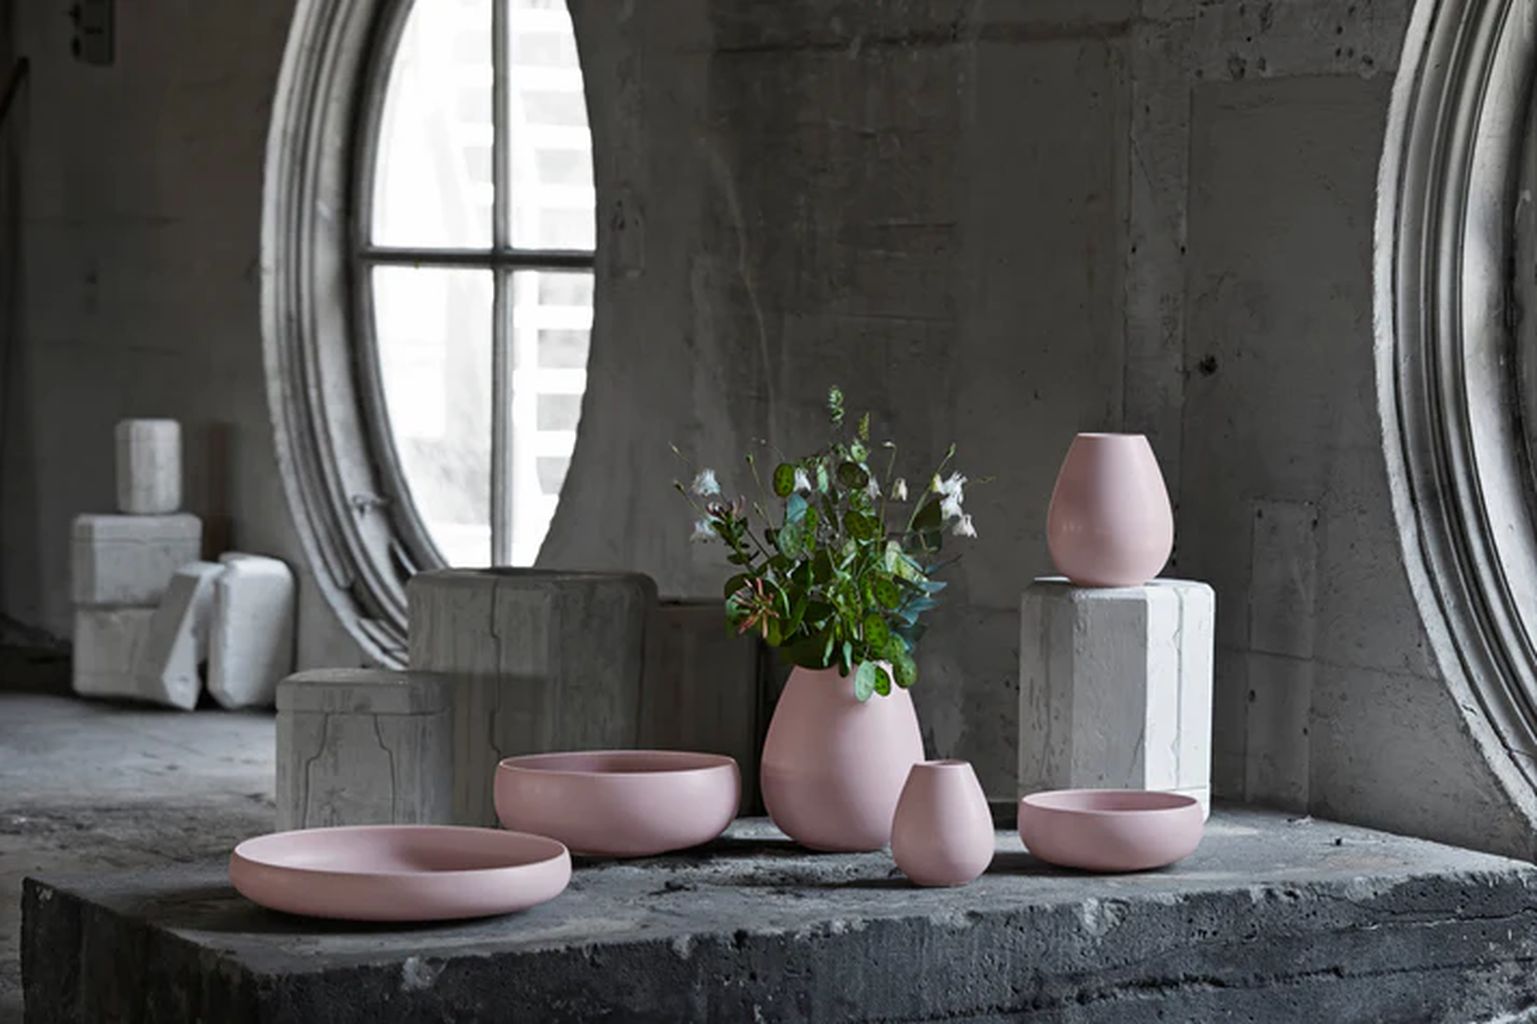 Knabstrup Keramik Earth Bowl Ø 22 cm, dammig rosa